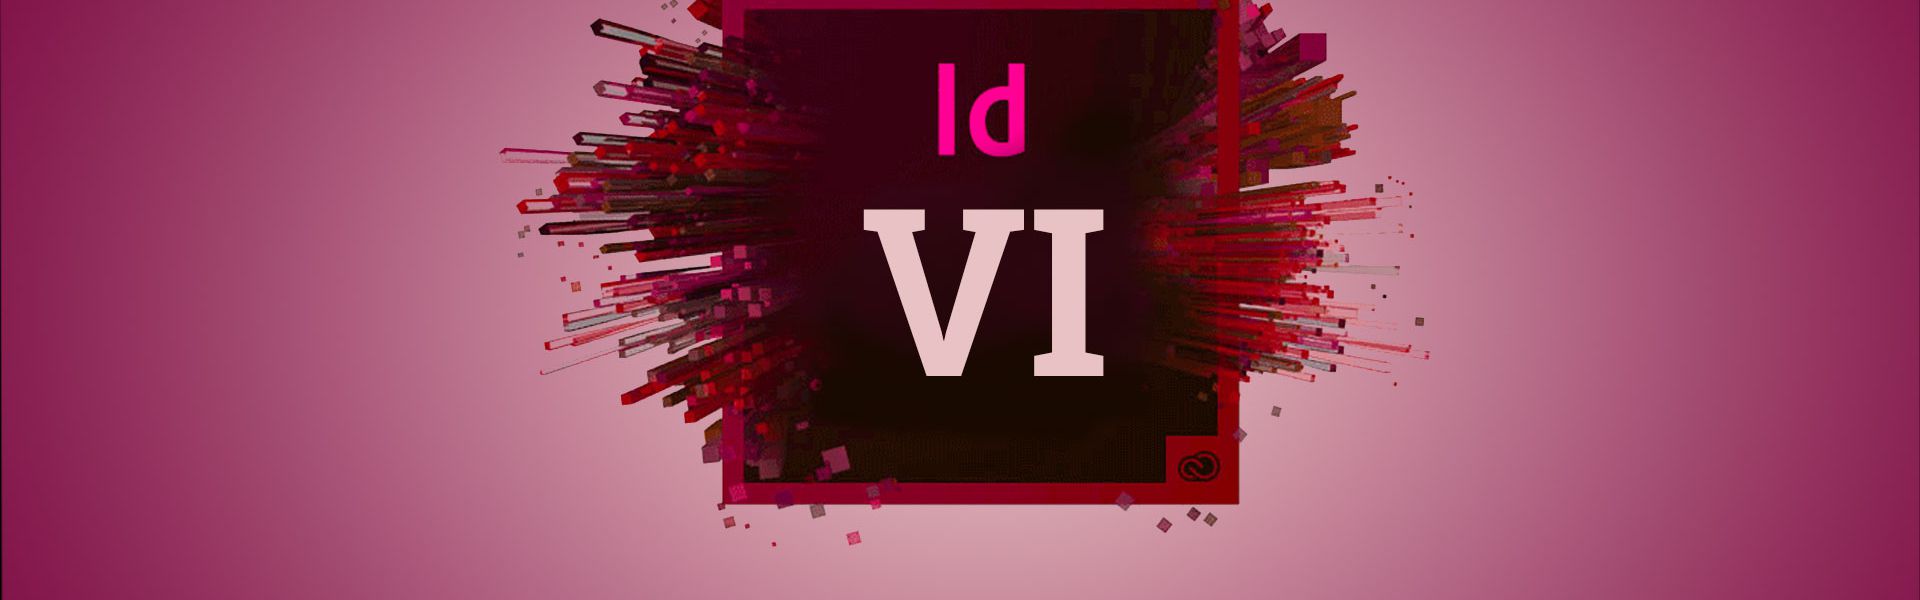 Adobe InDesign - Tabellen - VI